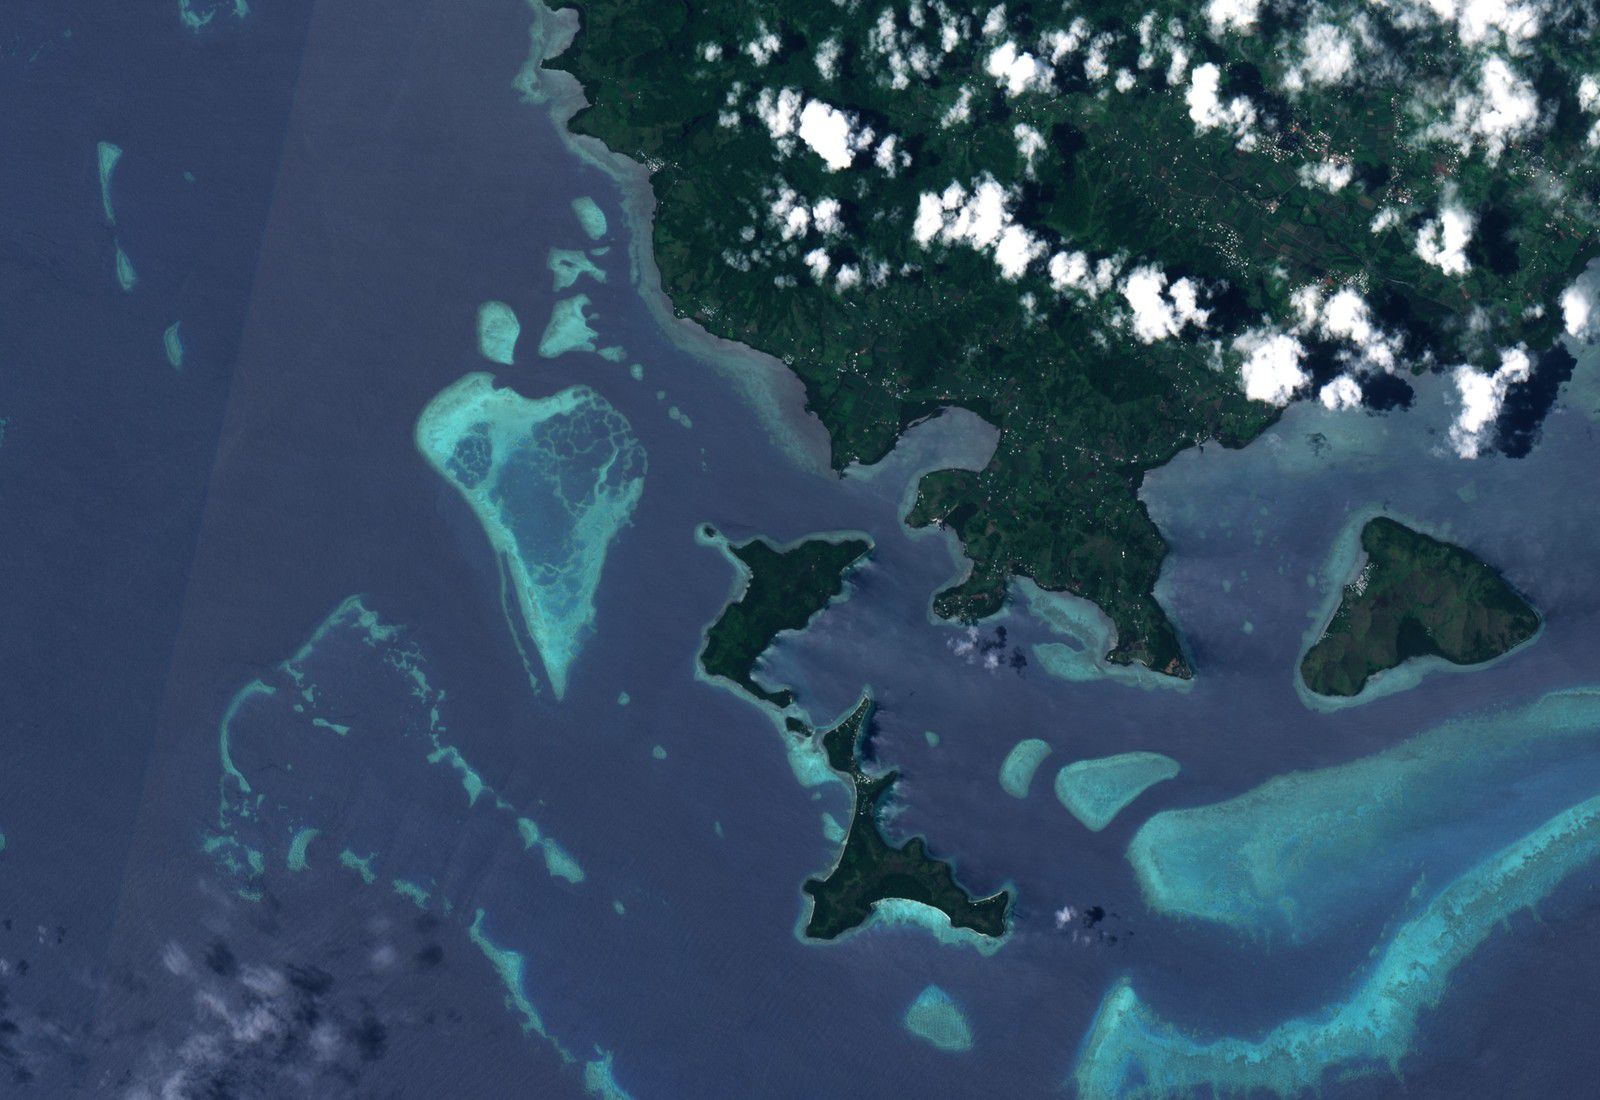 Saint-Valentin - île en forme de coeur - Fidji - satellite - Sentinel-2 - Copernicus - espace - Earth observation